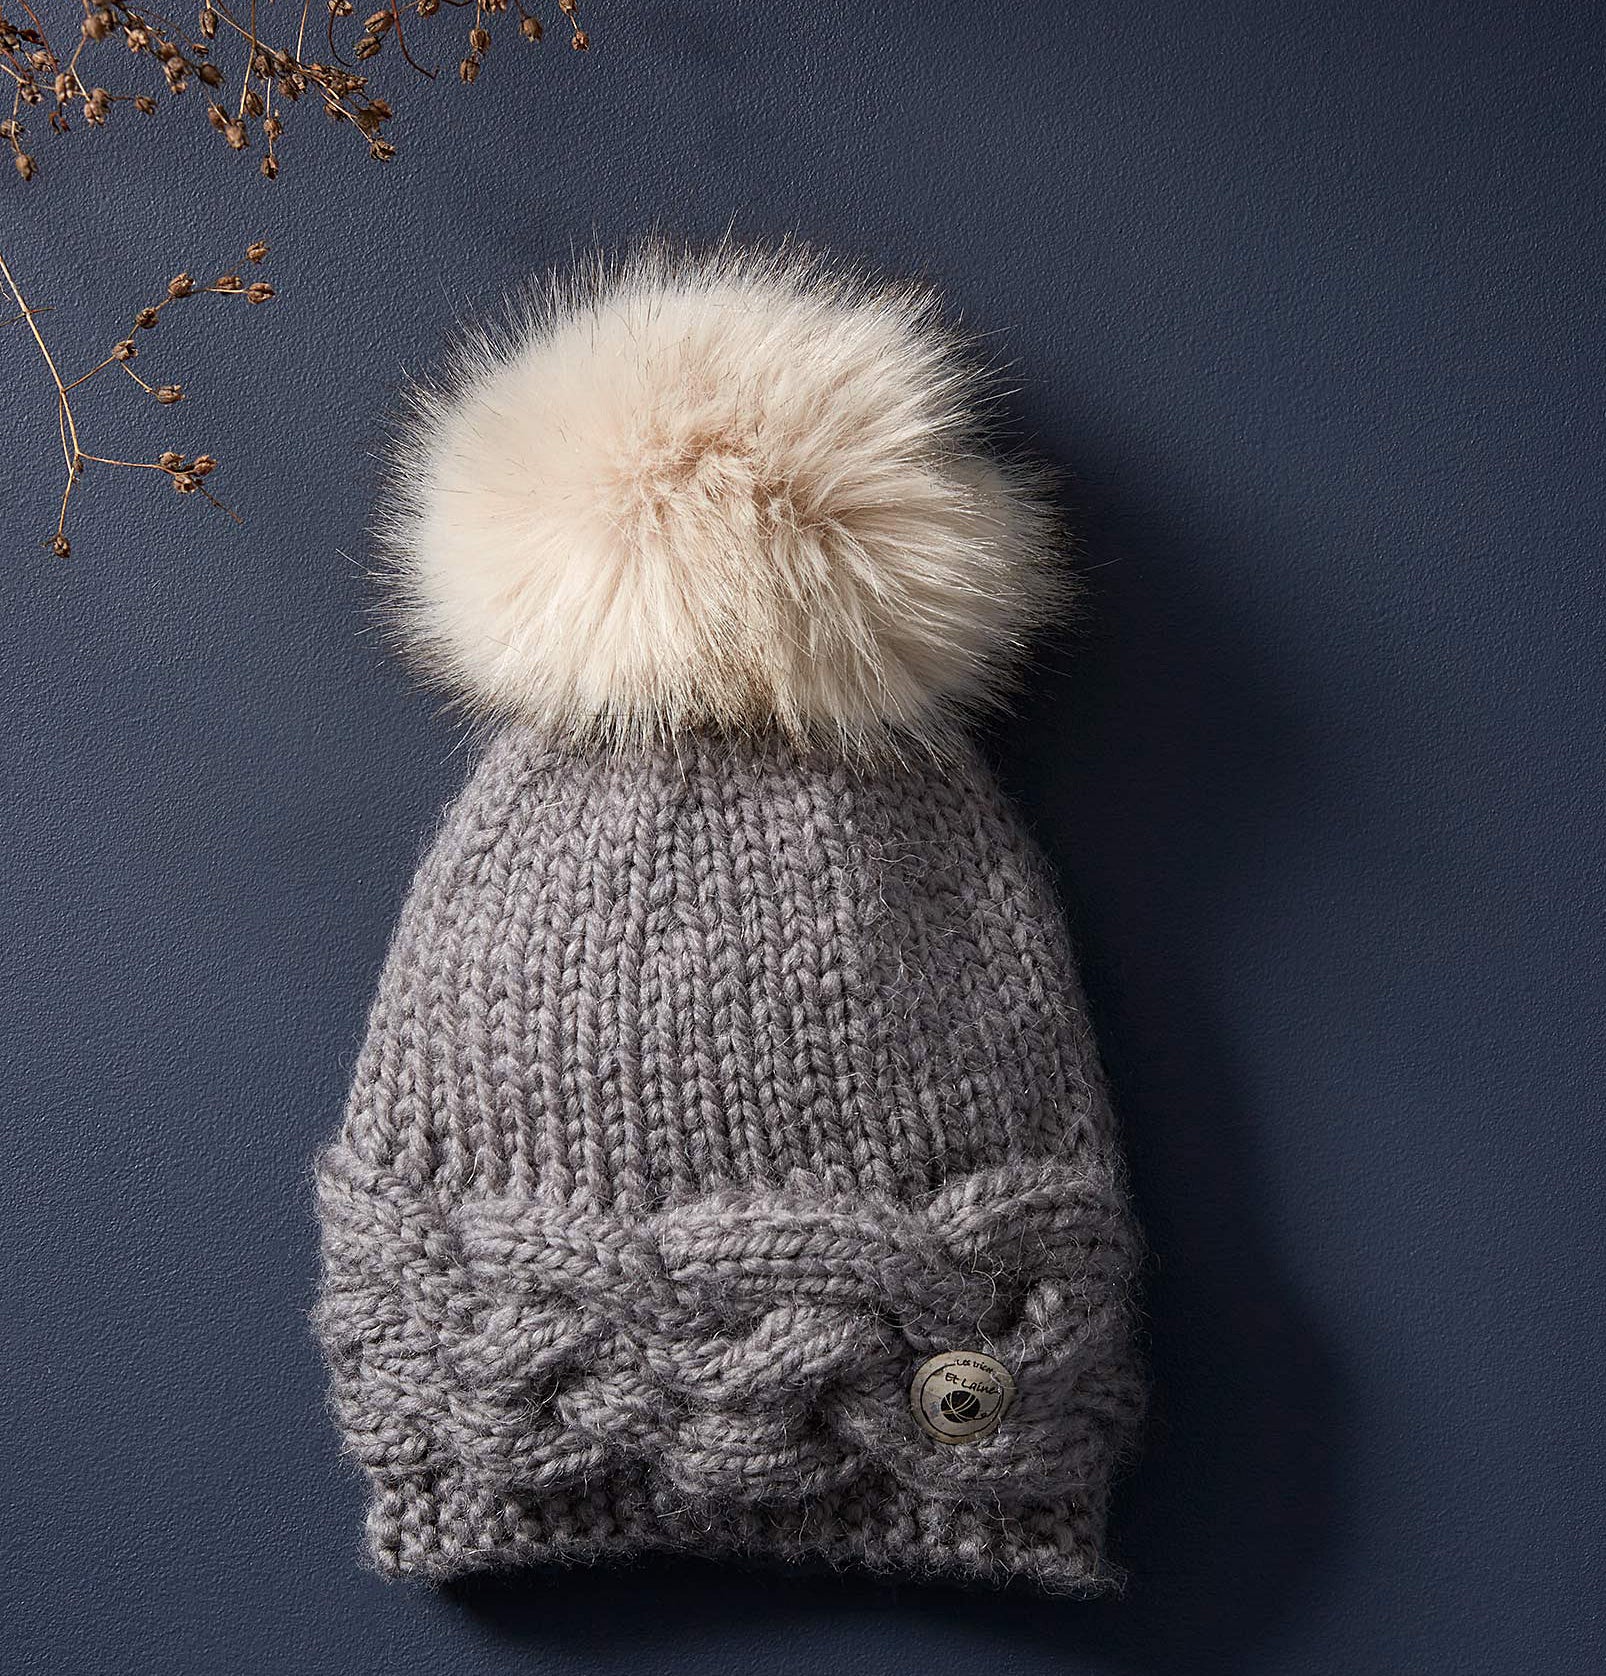 A knit hat with a pom pom on top lying on a plain background